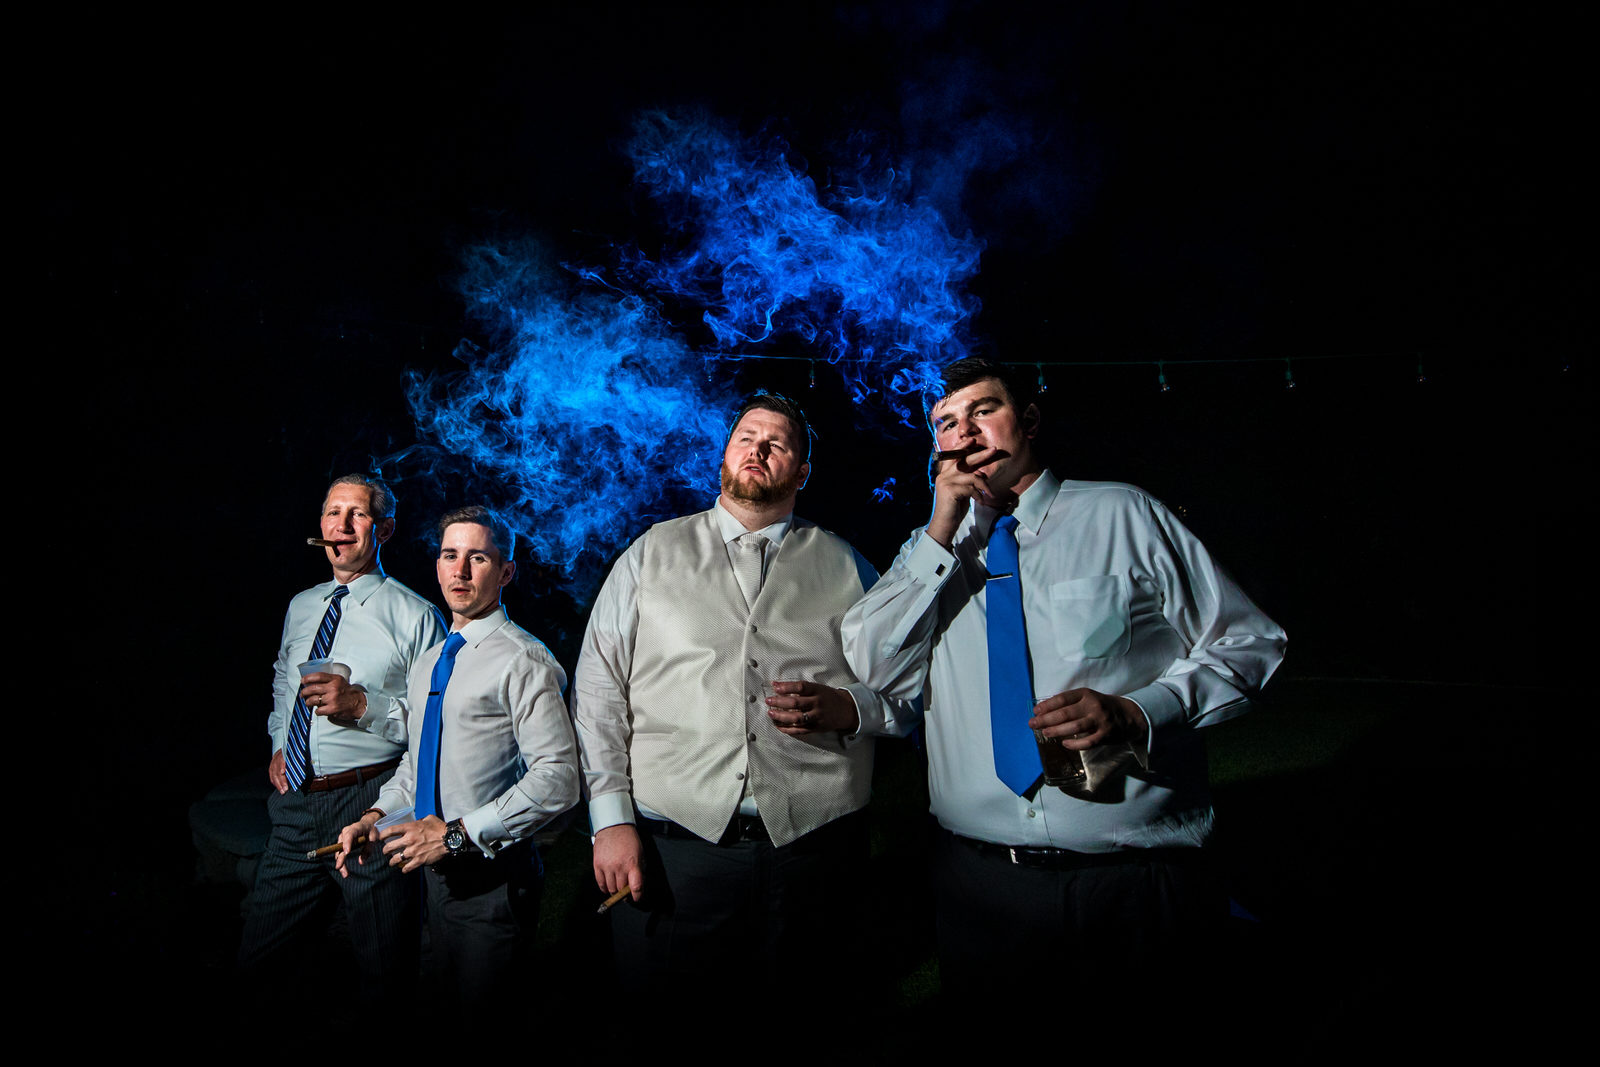 Saint Paul Wedding groomsmen with their cigars